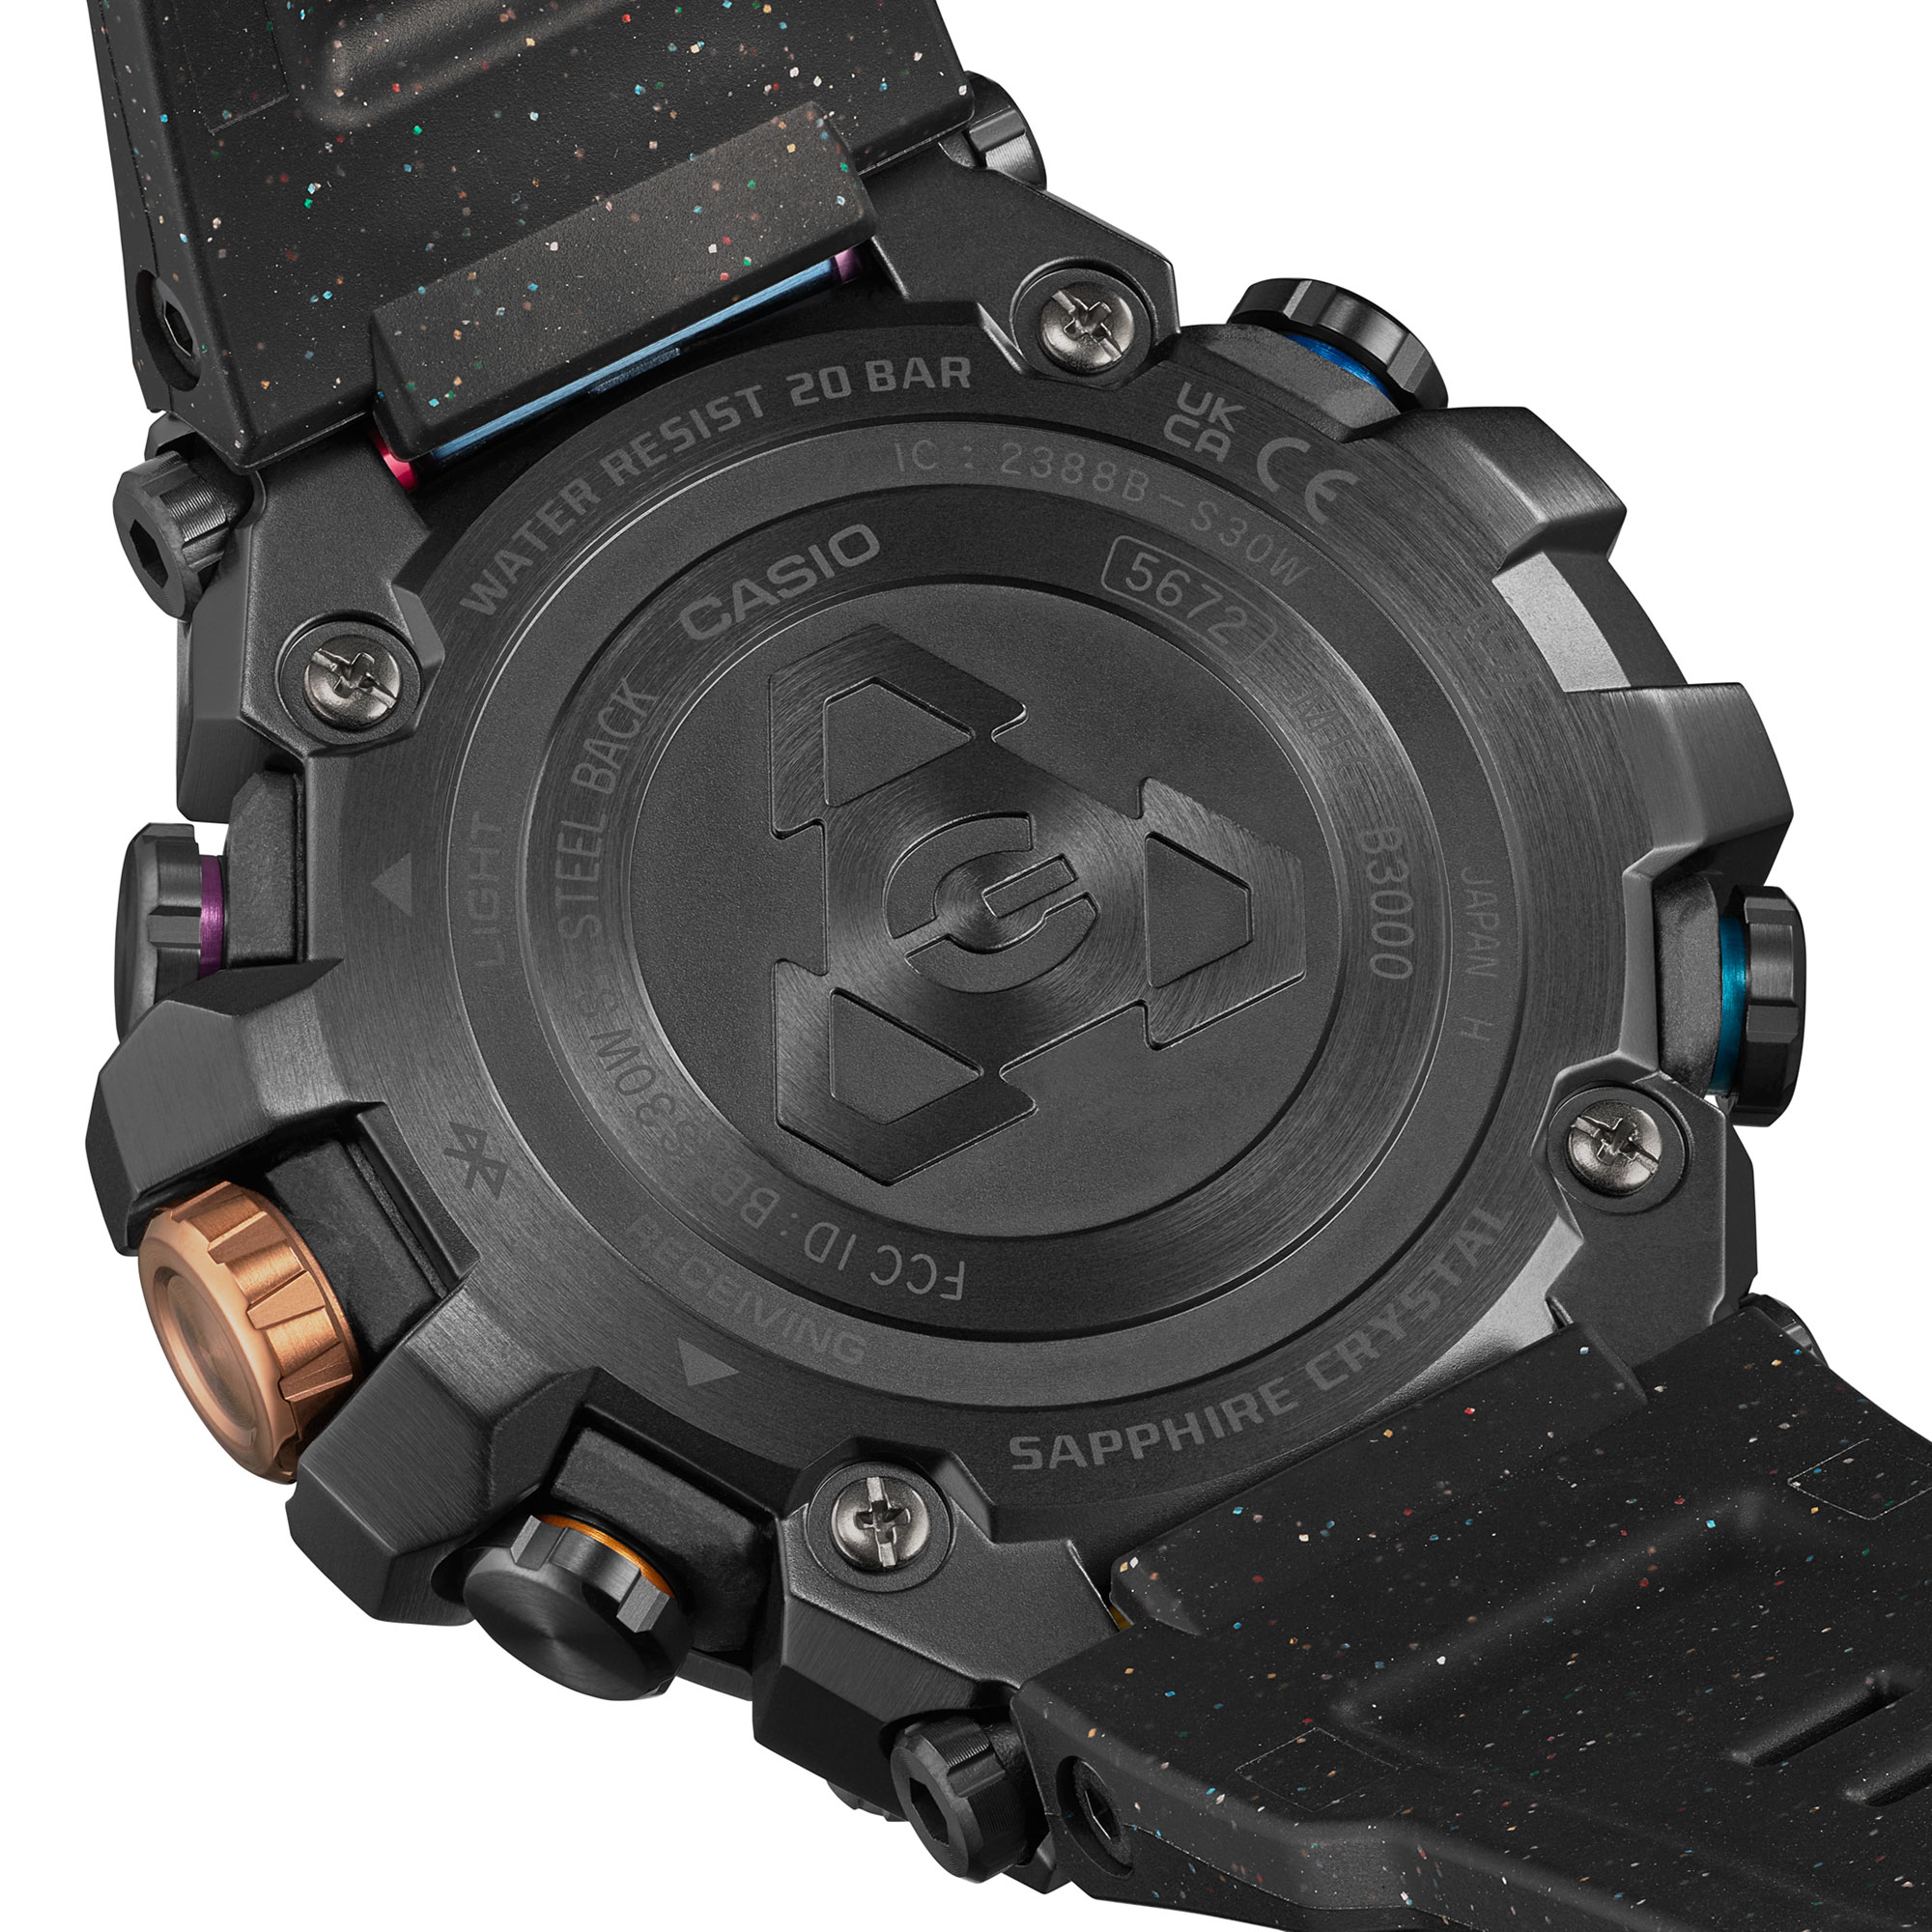 G-SHOCK的MTG-B3000DN-1A腕表底盖上装饰了TRIPLE G RESIST的logo。图／CASIO提供